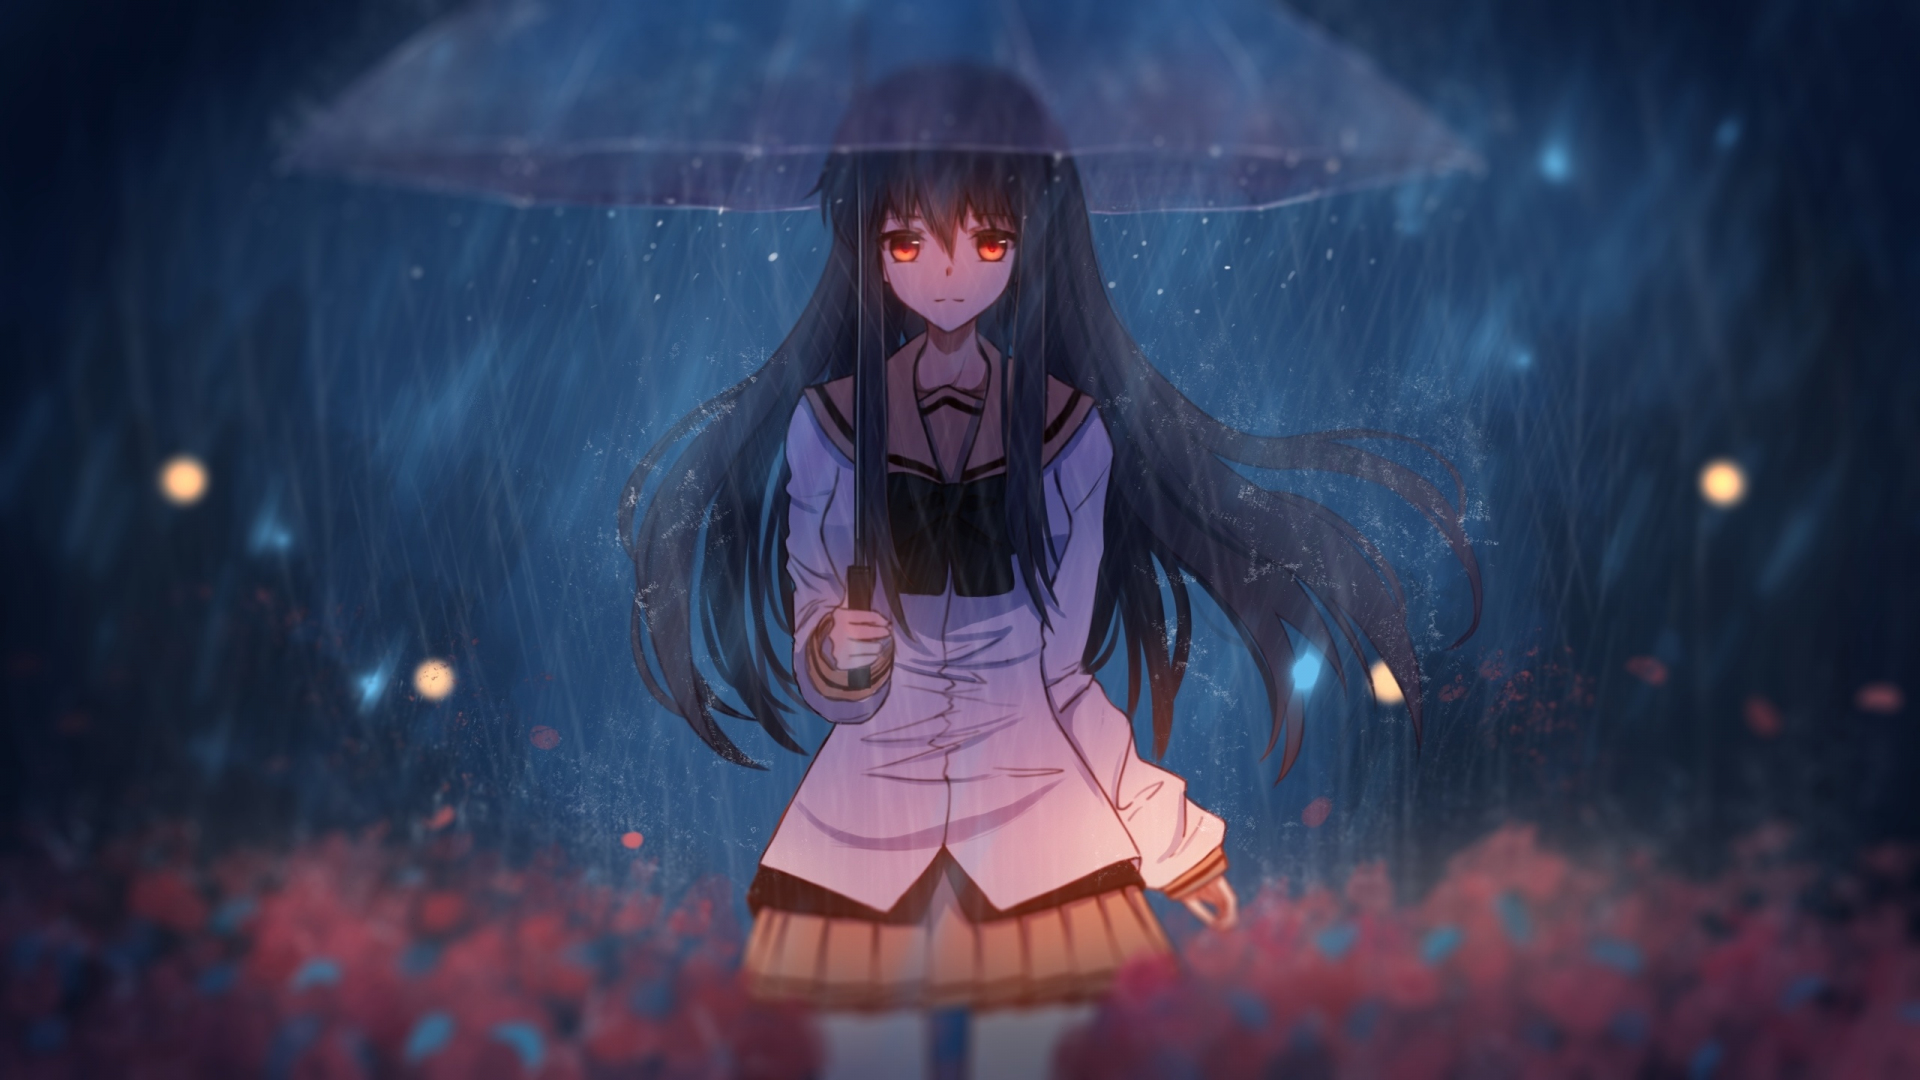 Download Wallpaper 1920x1080 Anime Girl In Rain With Umbrella Art